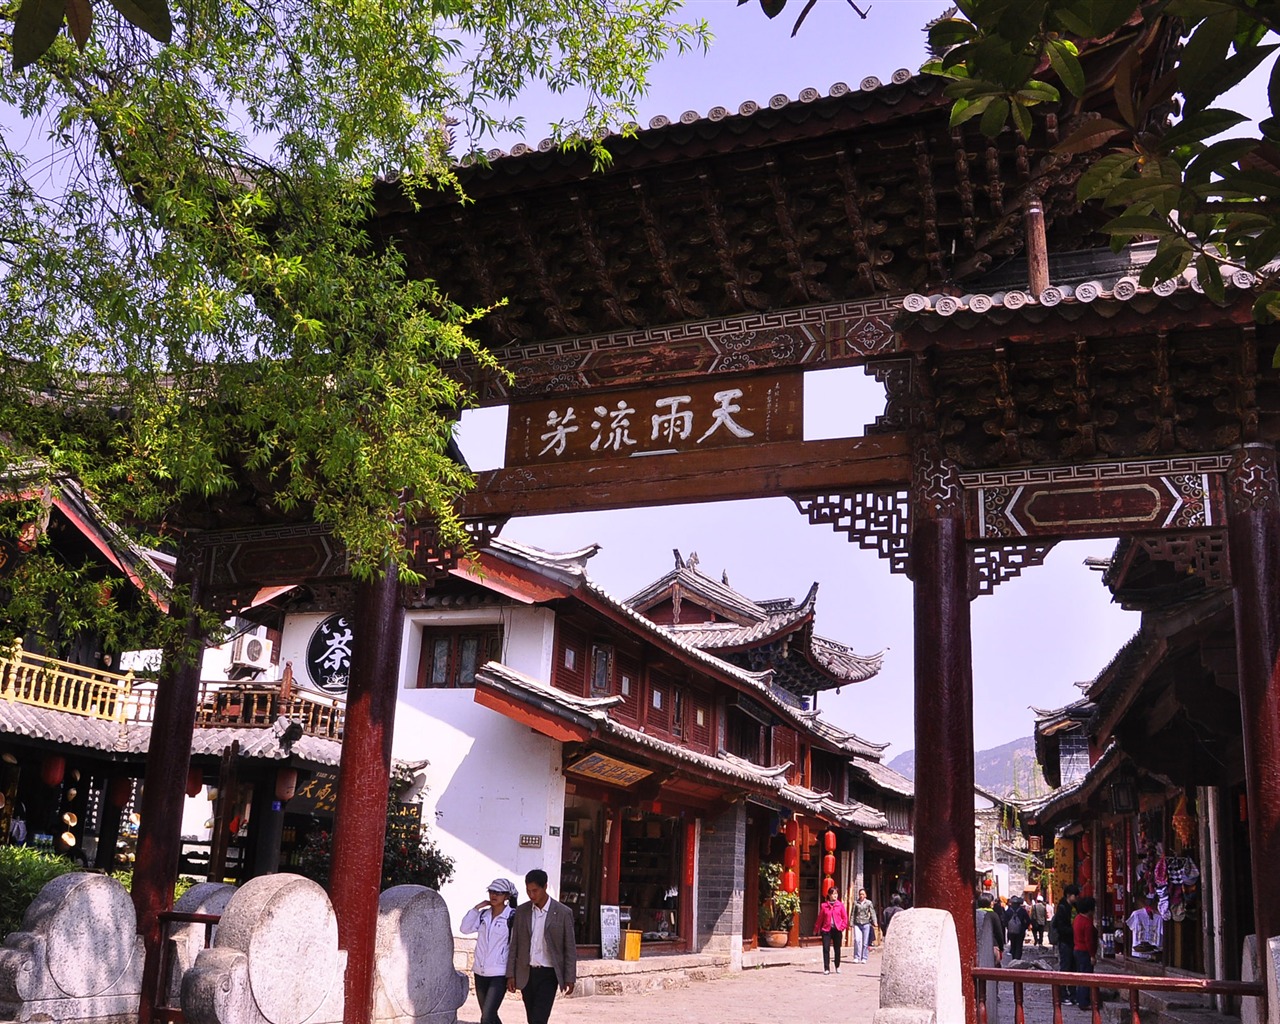 Lijiang ancient town atmosphere (2) (old Hong OK works) #22 - 1280x1024